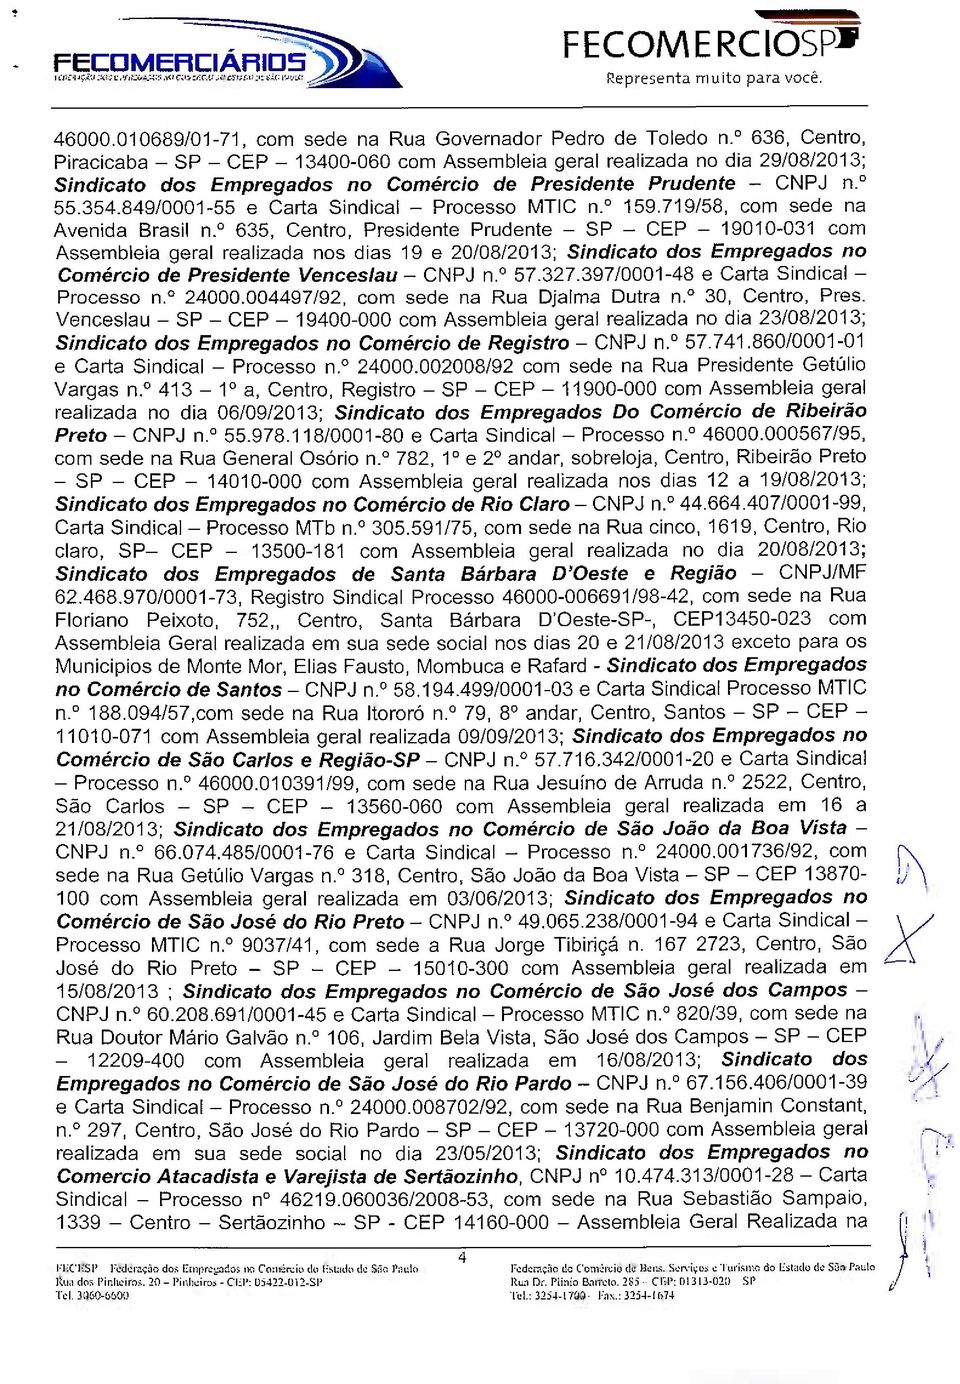 849/0001-55 e Carta Sindical - Processo MTIC n. 159.719/58, com sede na Avenida Brasil n.